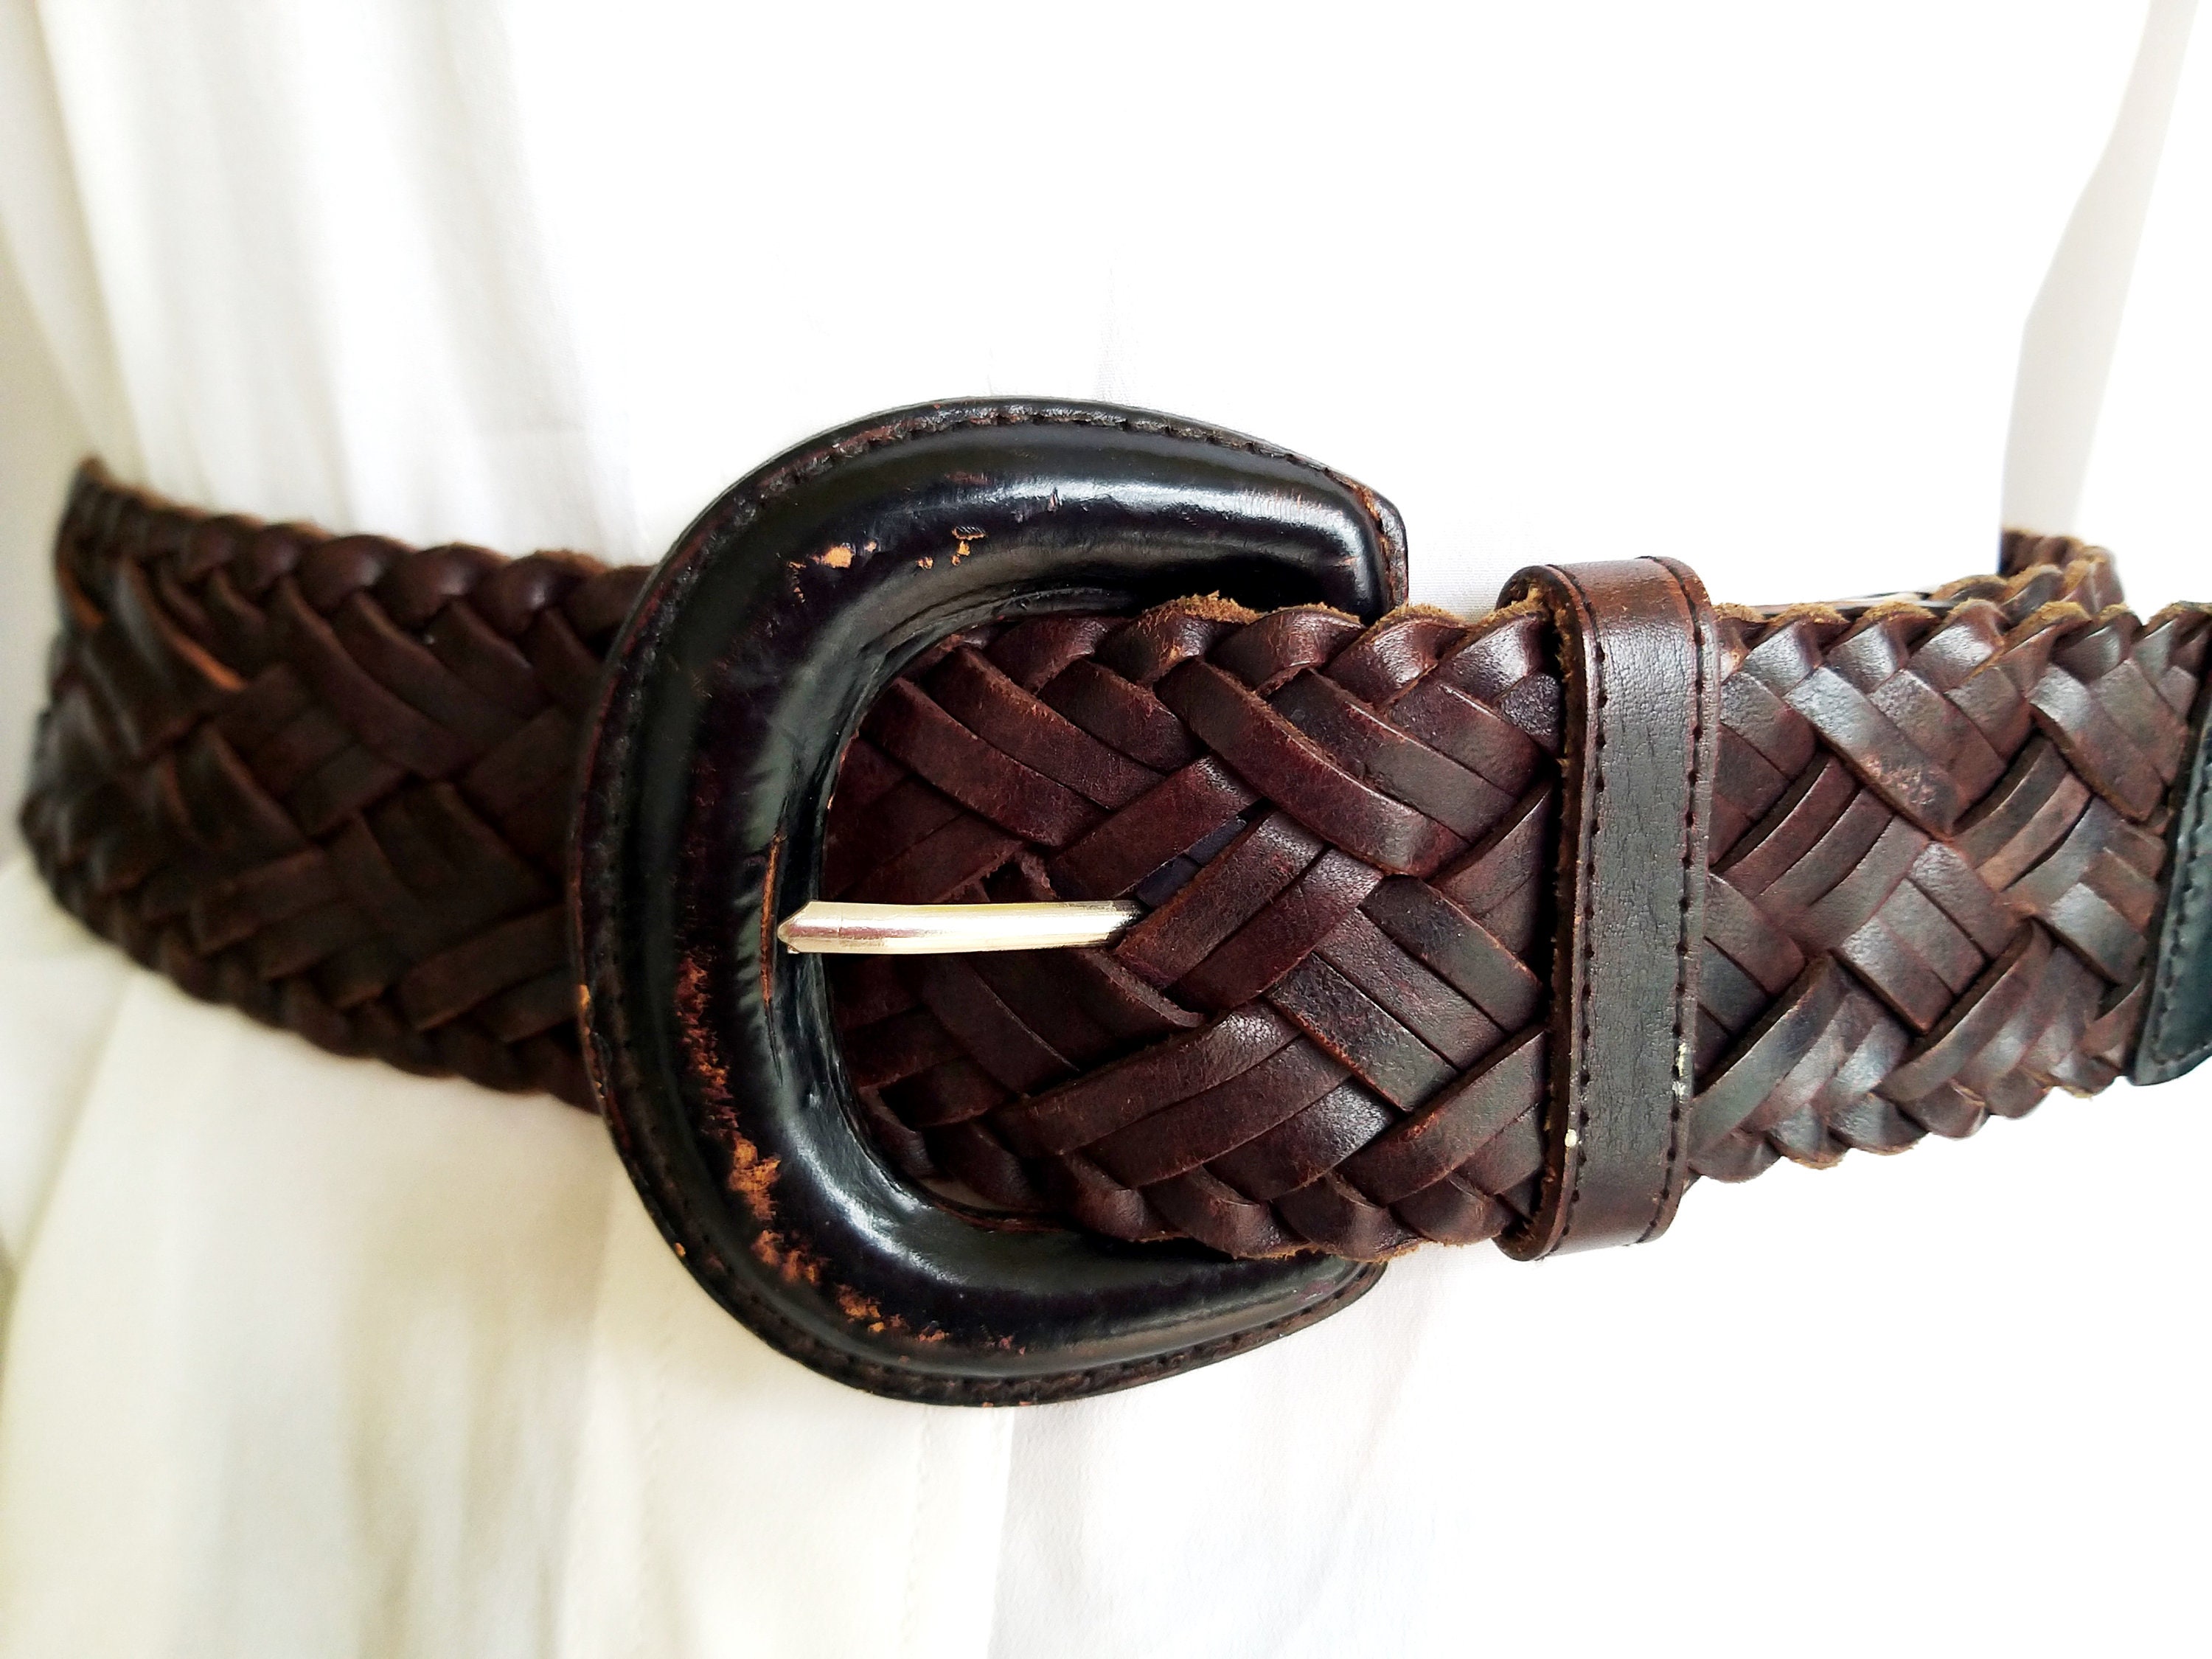 Western Woven Leather Belt Vintage Womens riem voor vrouwen accessoires Donkerbruine lederen riem XL cowgirl riem Dames Riem bruine riem Accessoires Riemen & bretels Riemen 